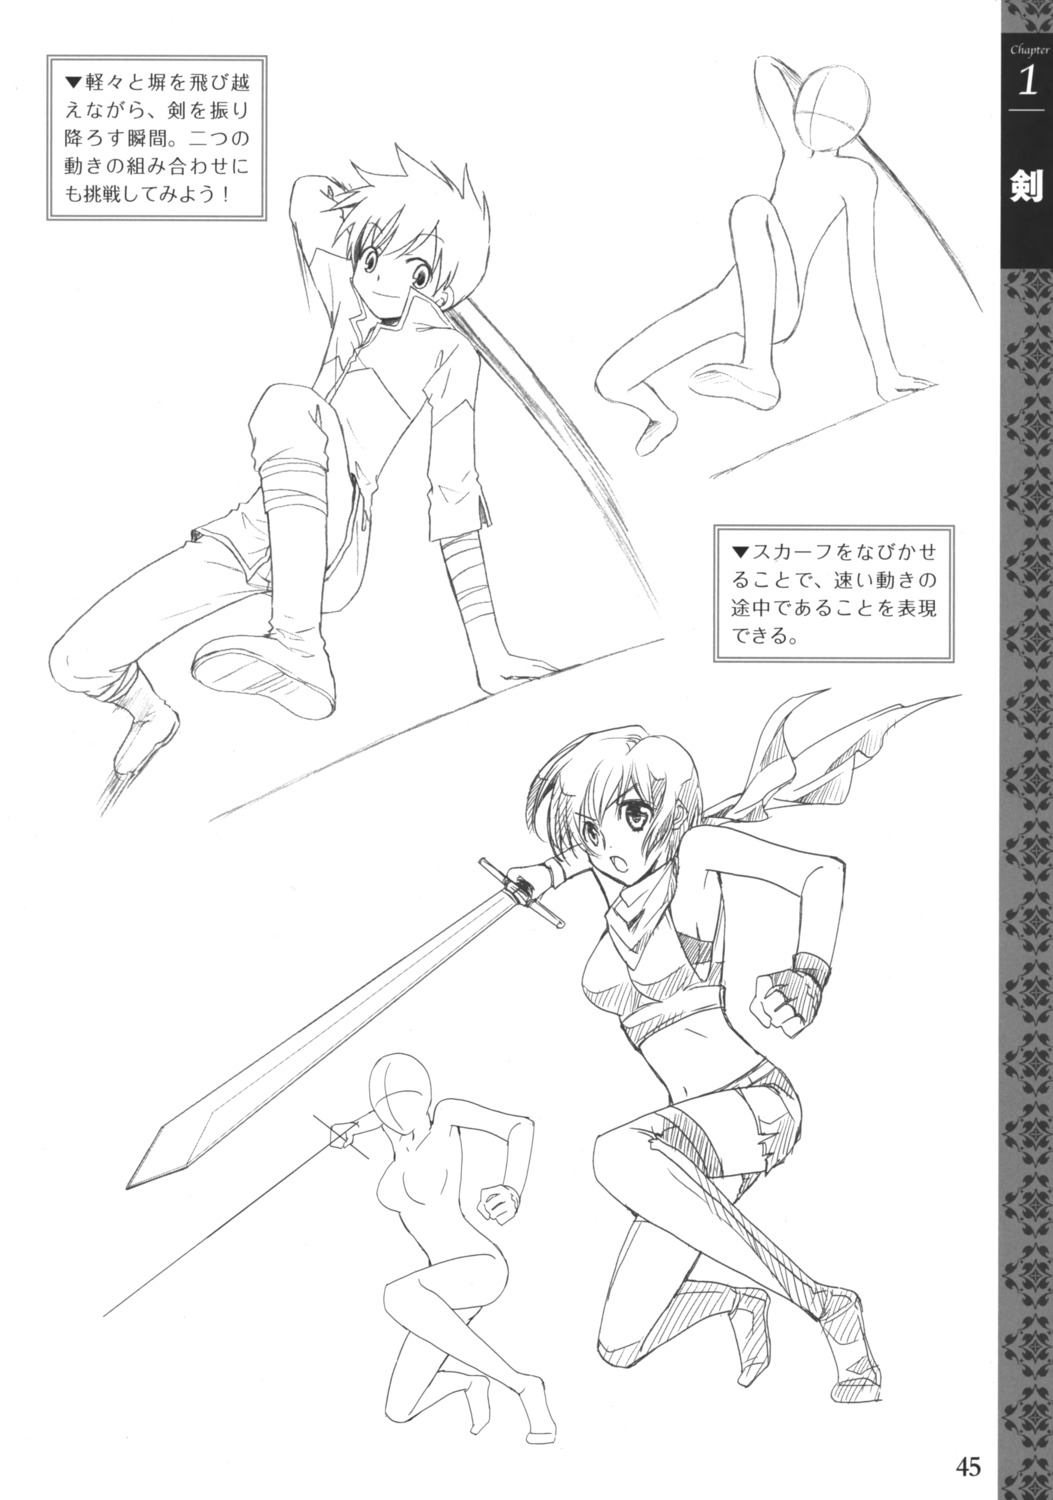 monochrome sketch sword